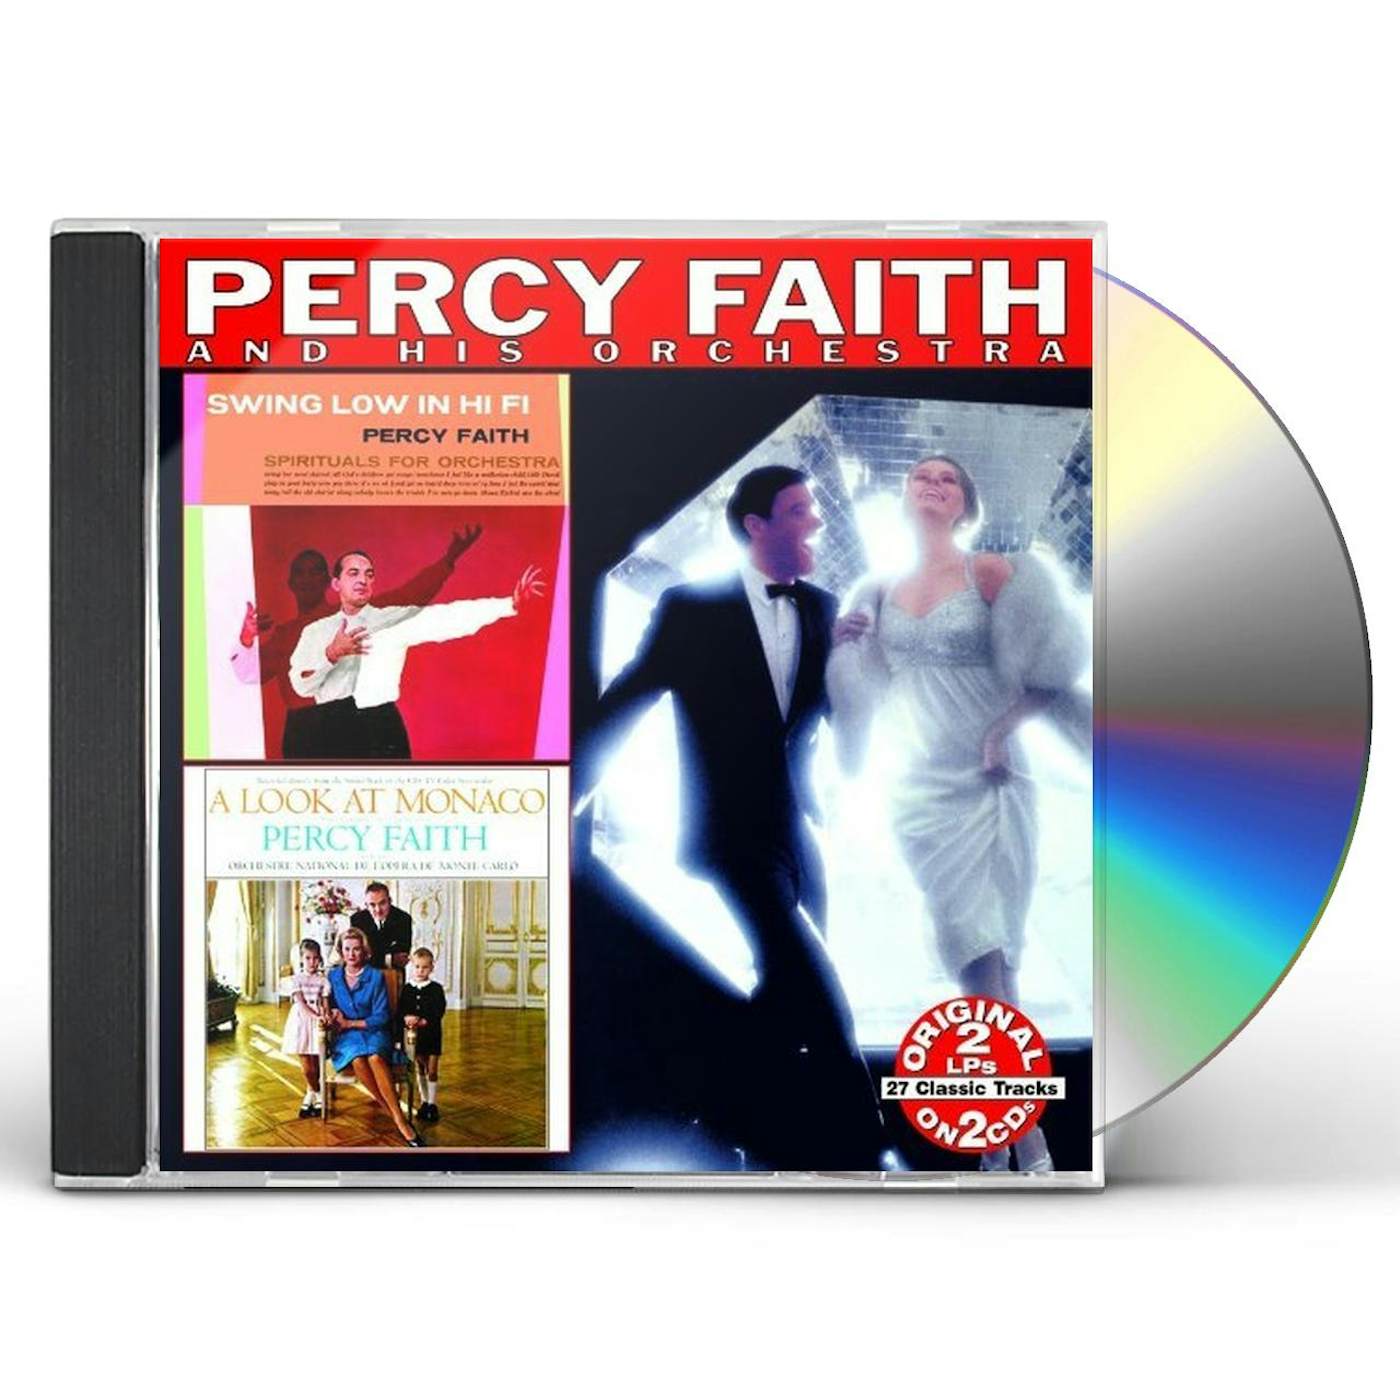 Percy Faith SWING LOW IN HI FI: A LOOK AT MONACO CD